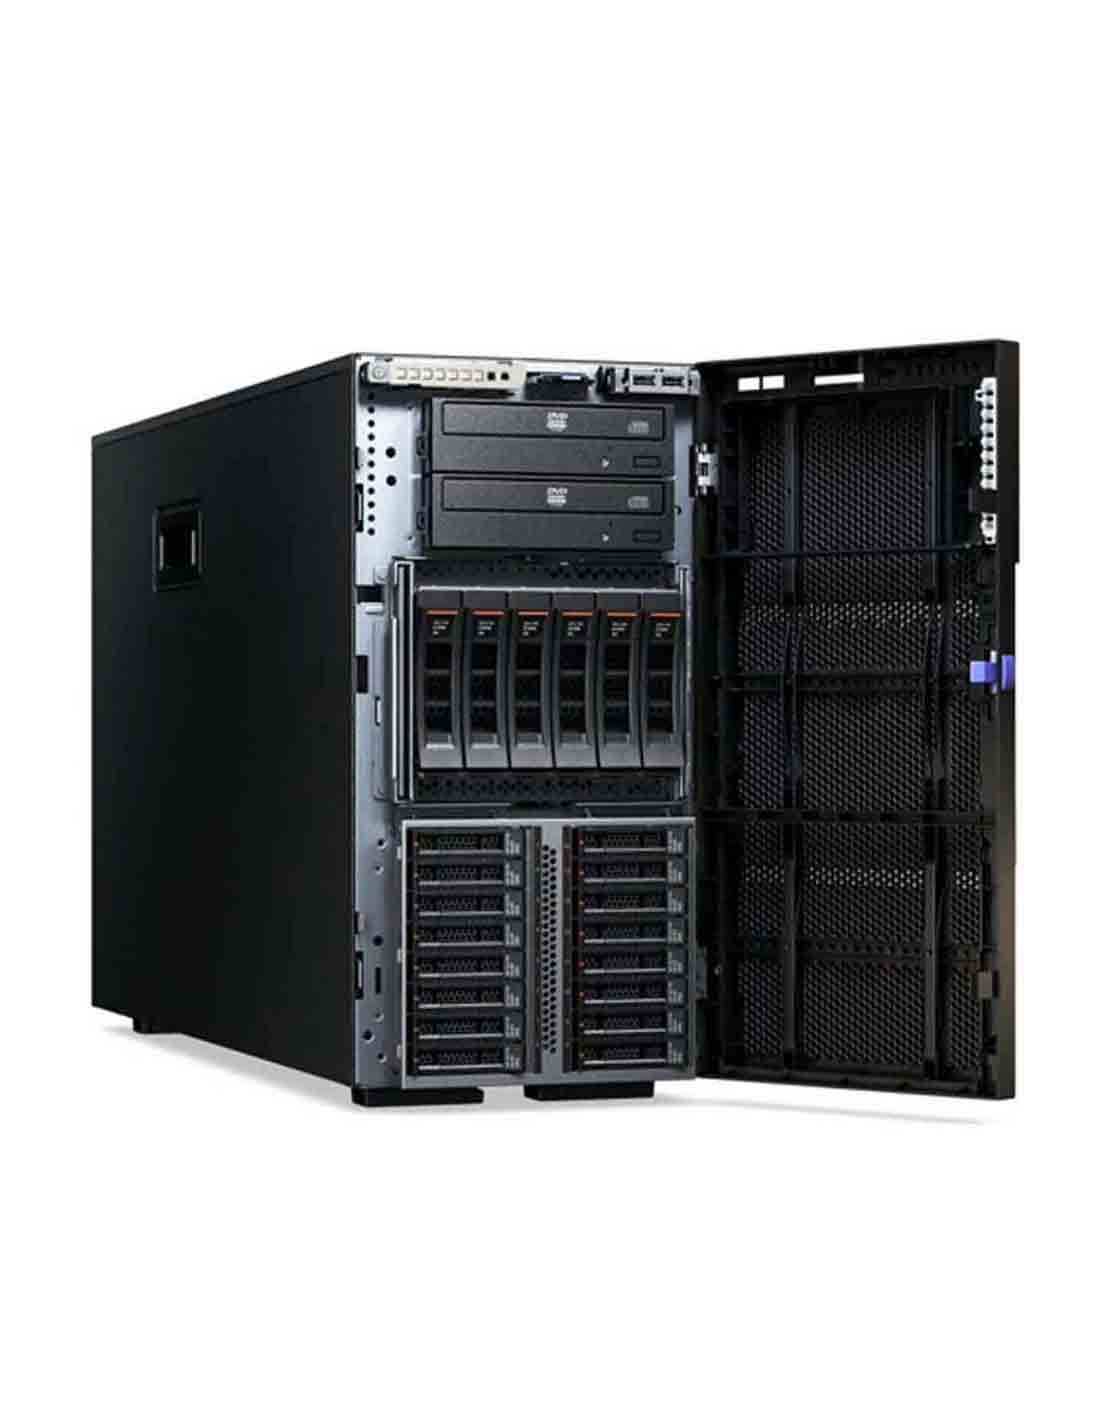 Lenovo x3500 M5 Tower Server E5-2630V3 5464K5G cheaper in Dubai